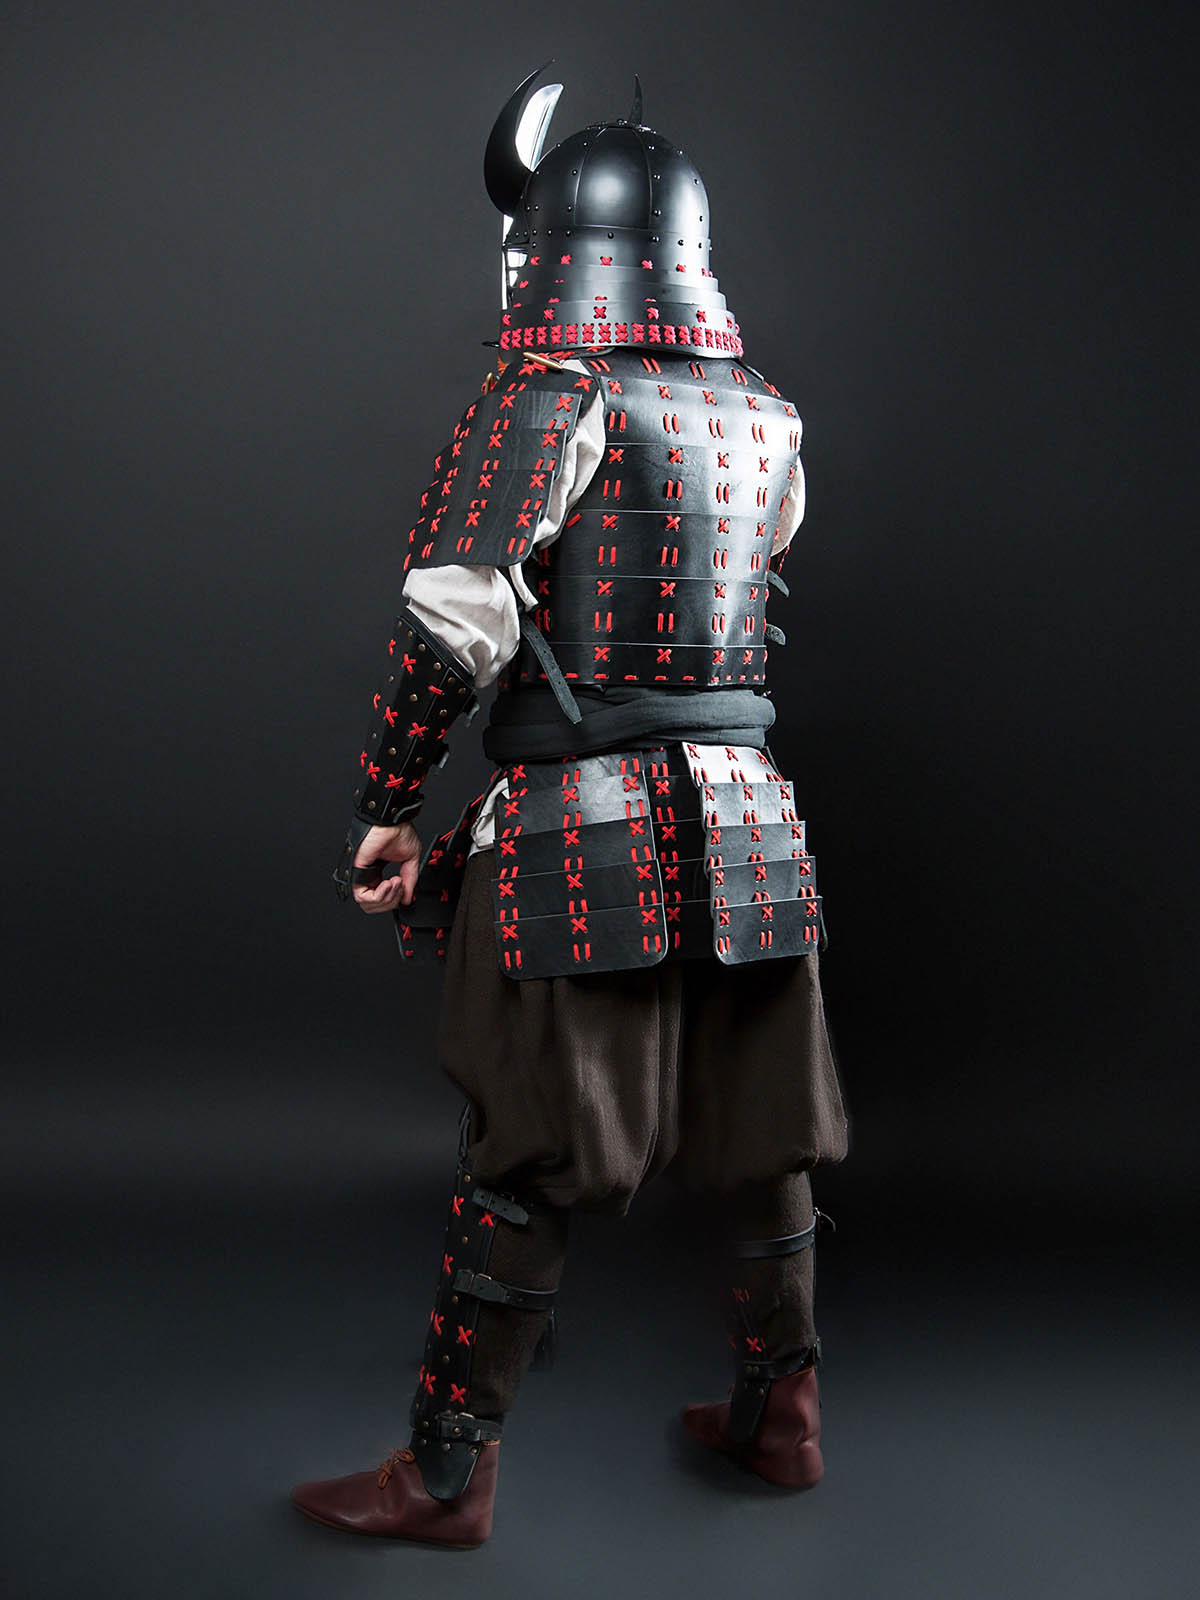 samurai gauntlets - Google Search  Samurai armor, Samurai, Leather armor